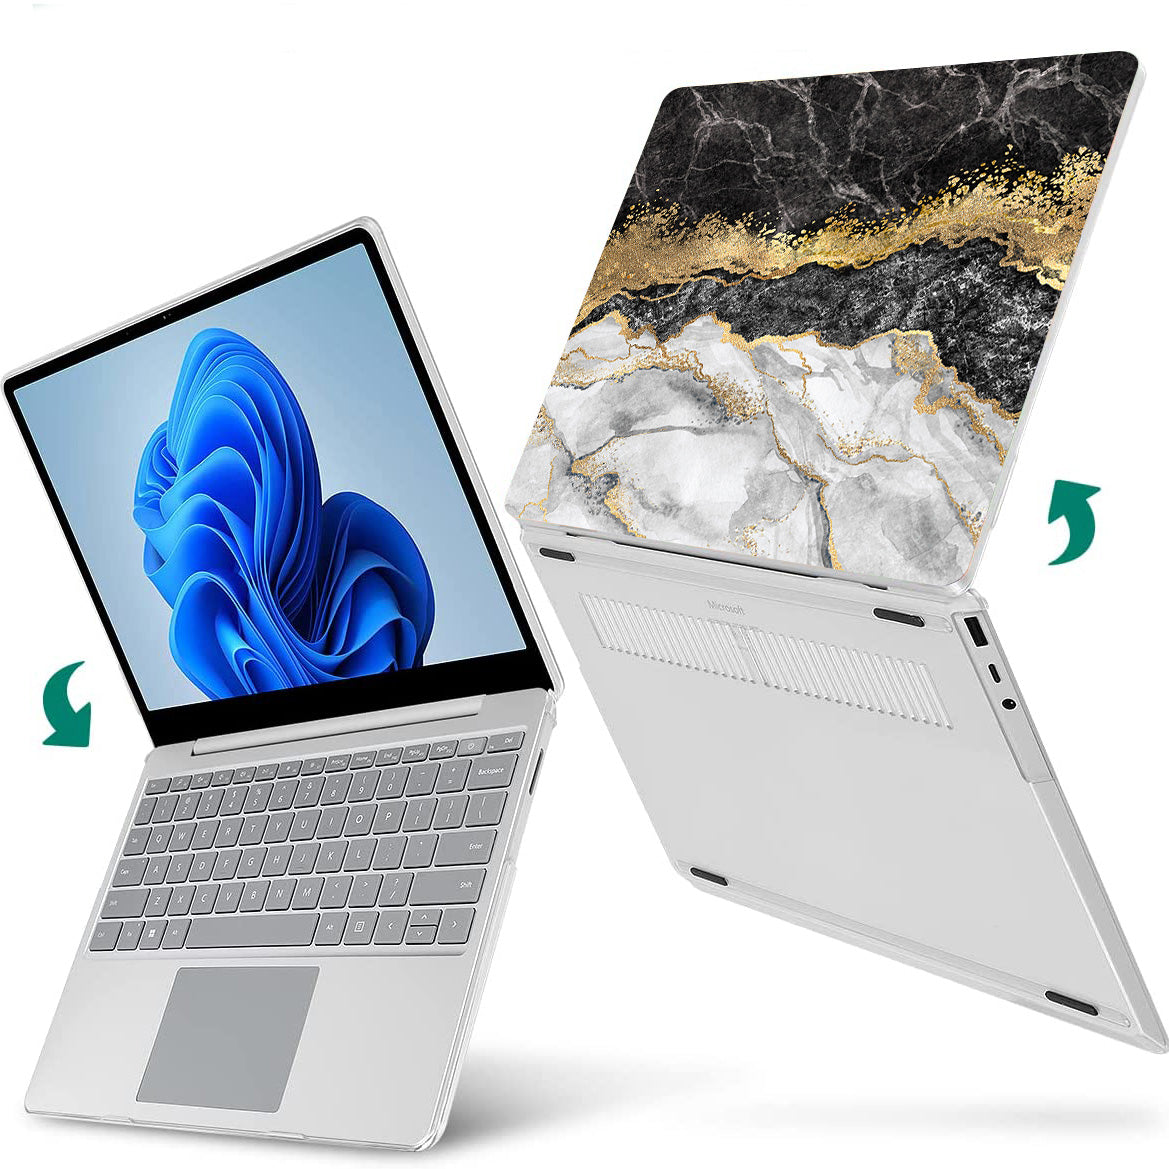 Gold River  Microsoft Surface Laptop Case